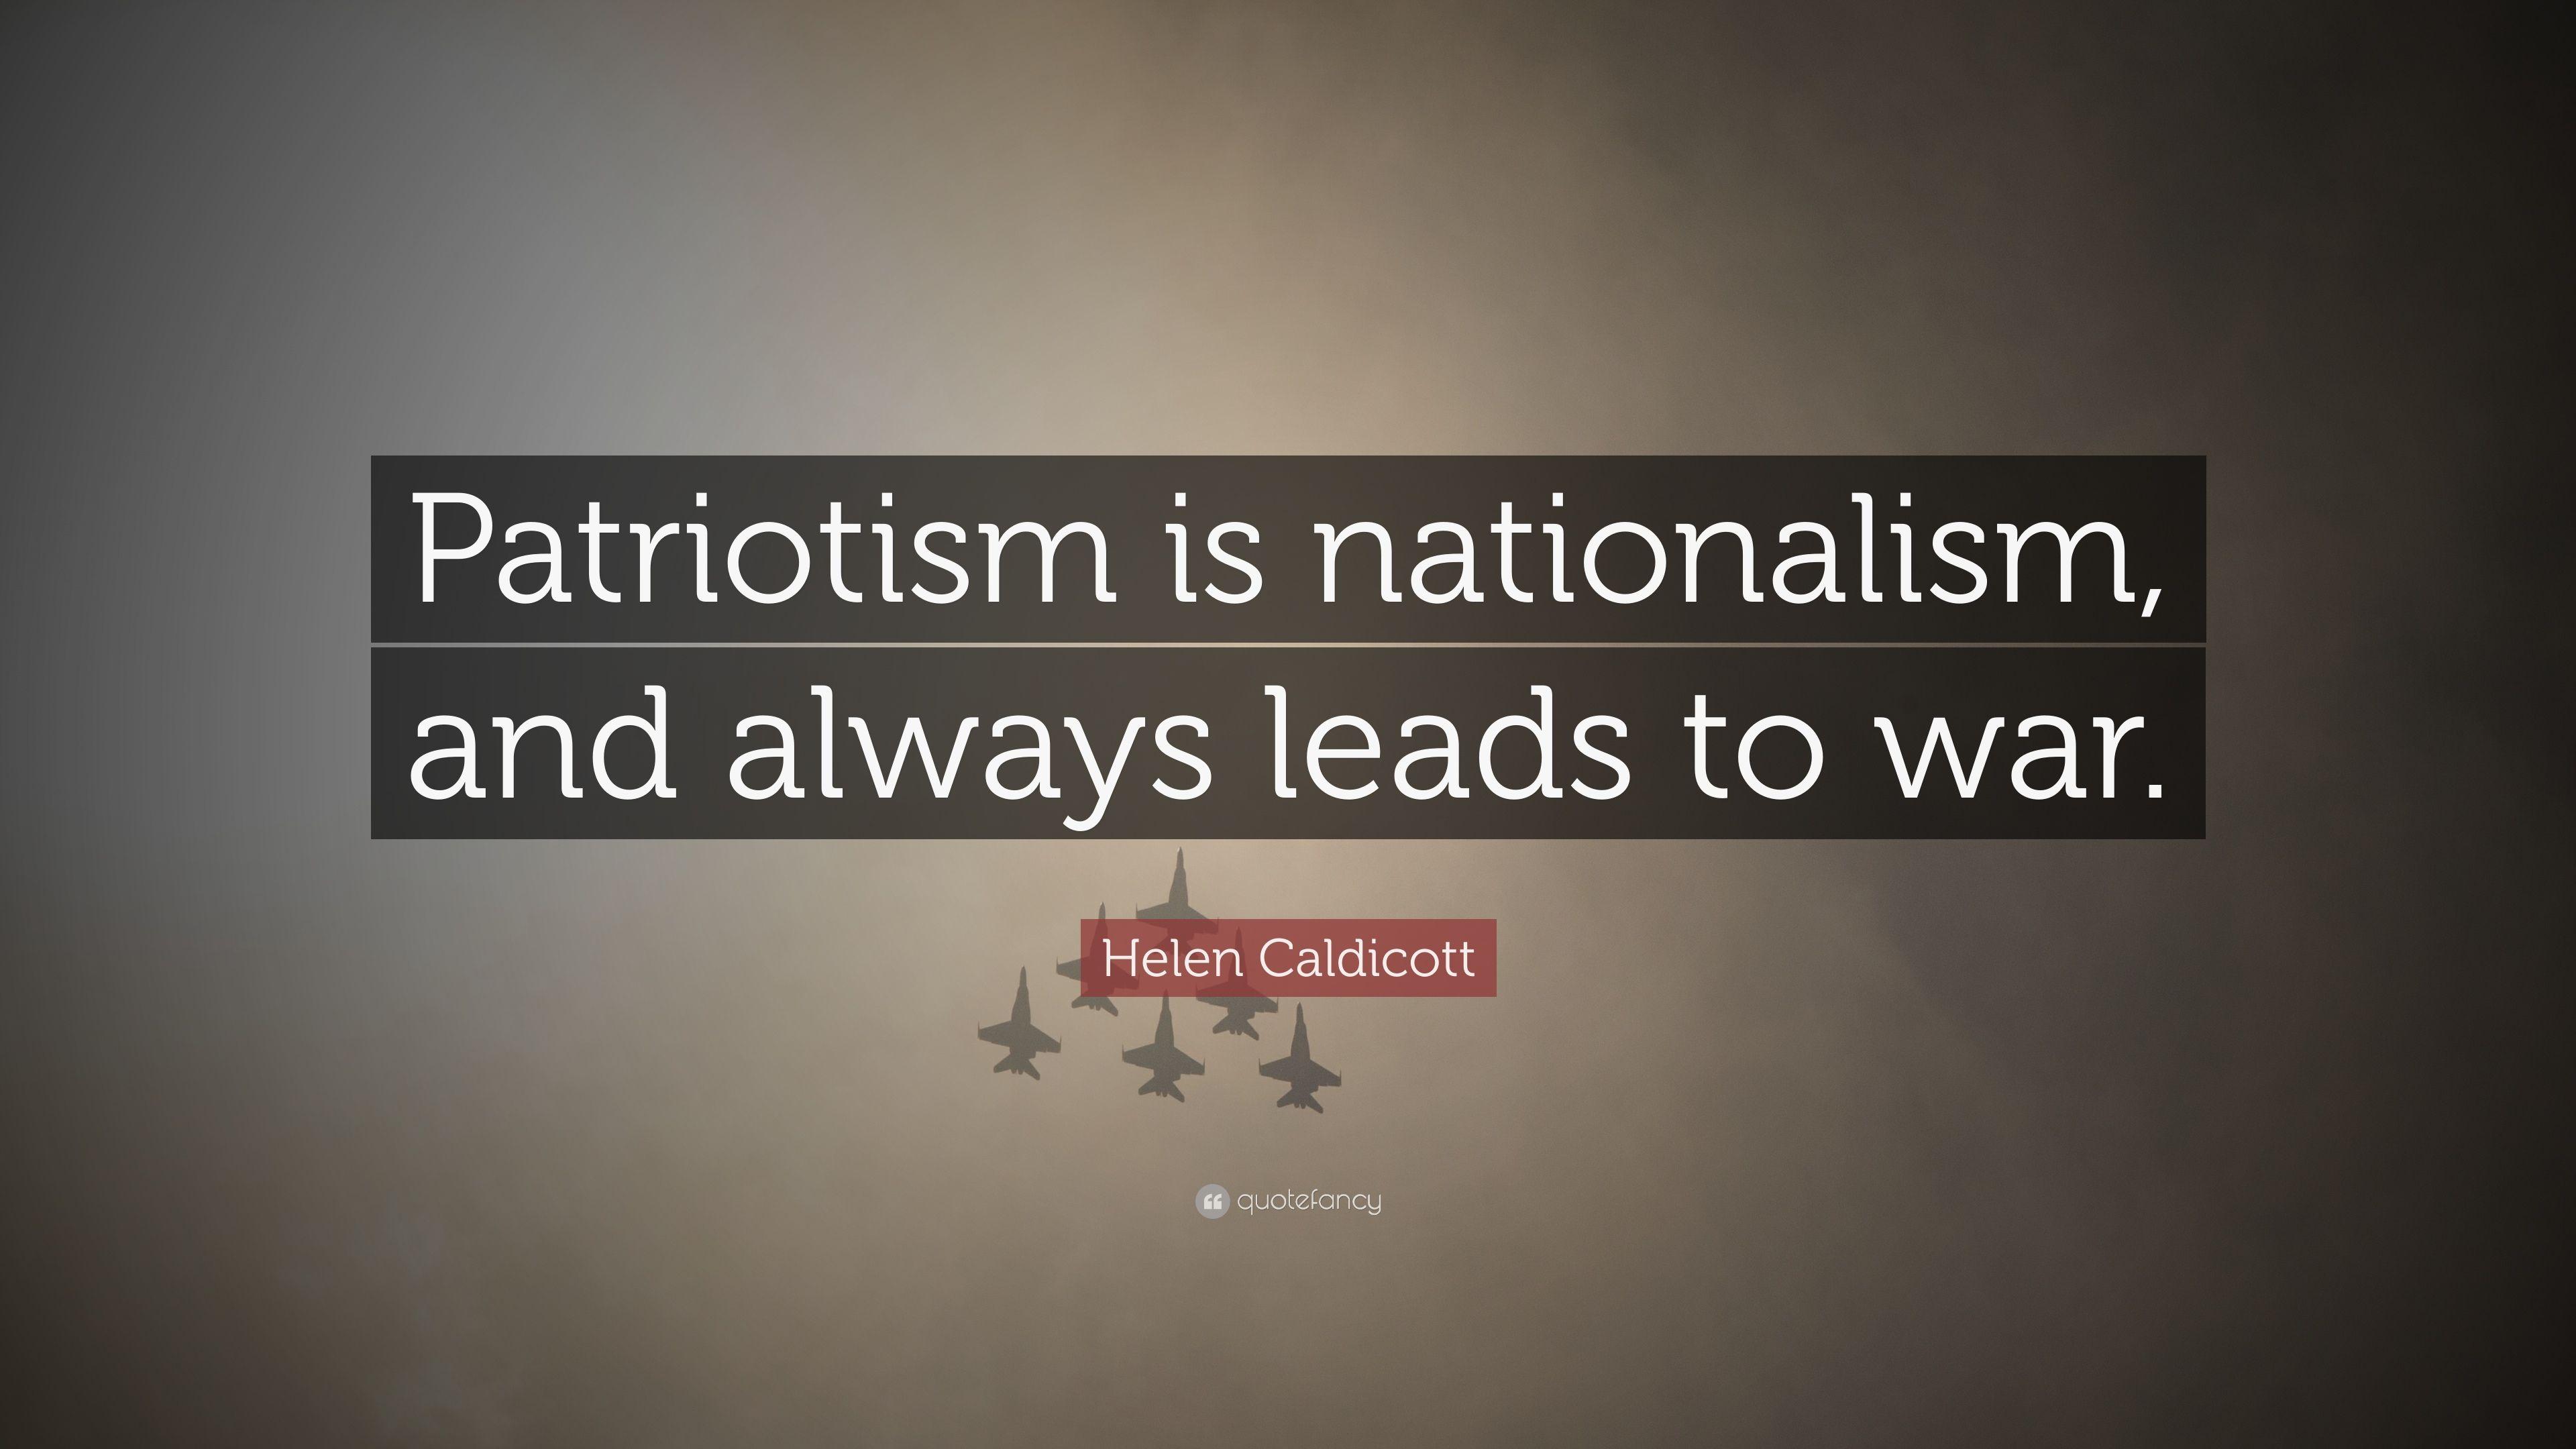 Helen Caldicott Quote: “Patriotism is nationalism, and always leads